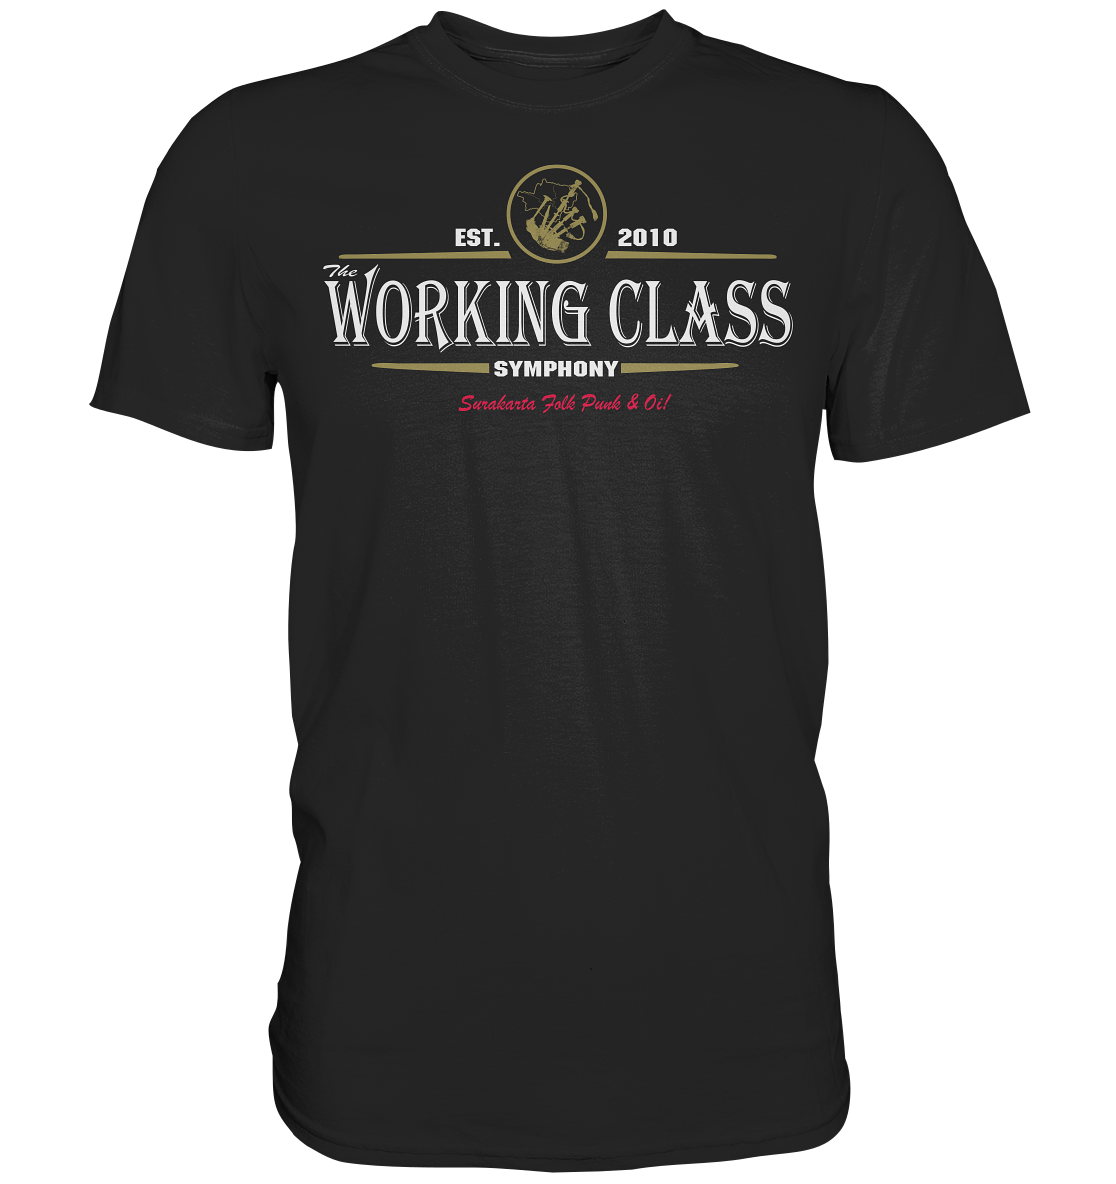 The Working Class Symphony "Stout Logo" - Premium Shirt